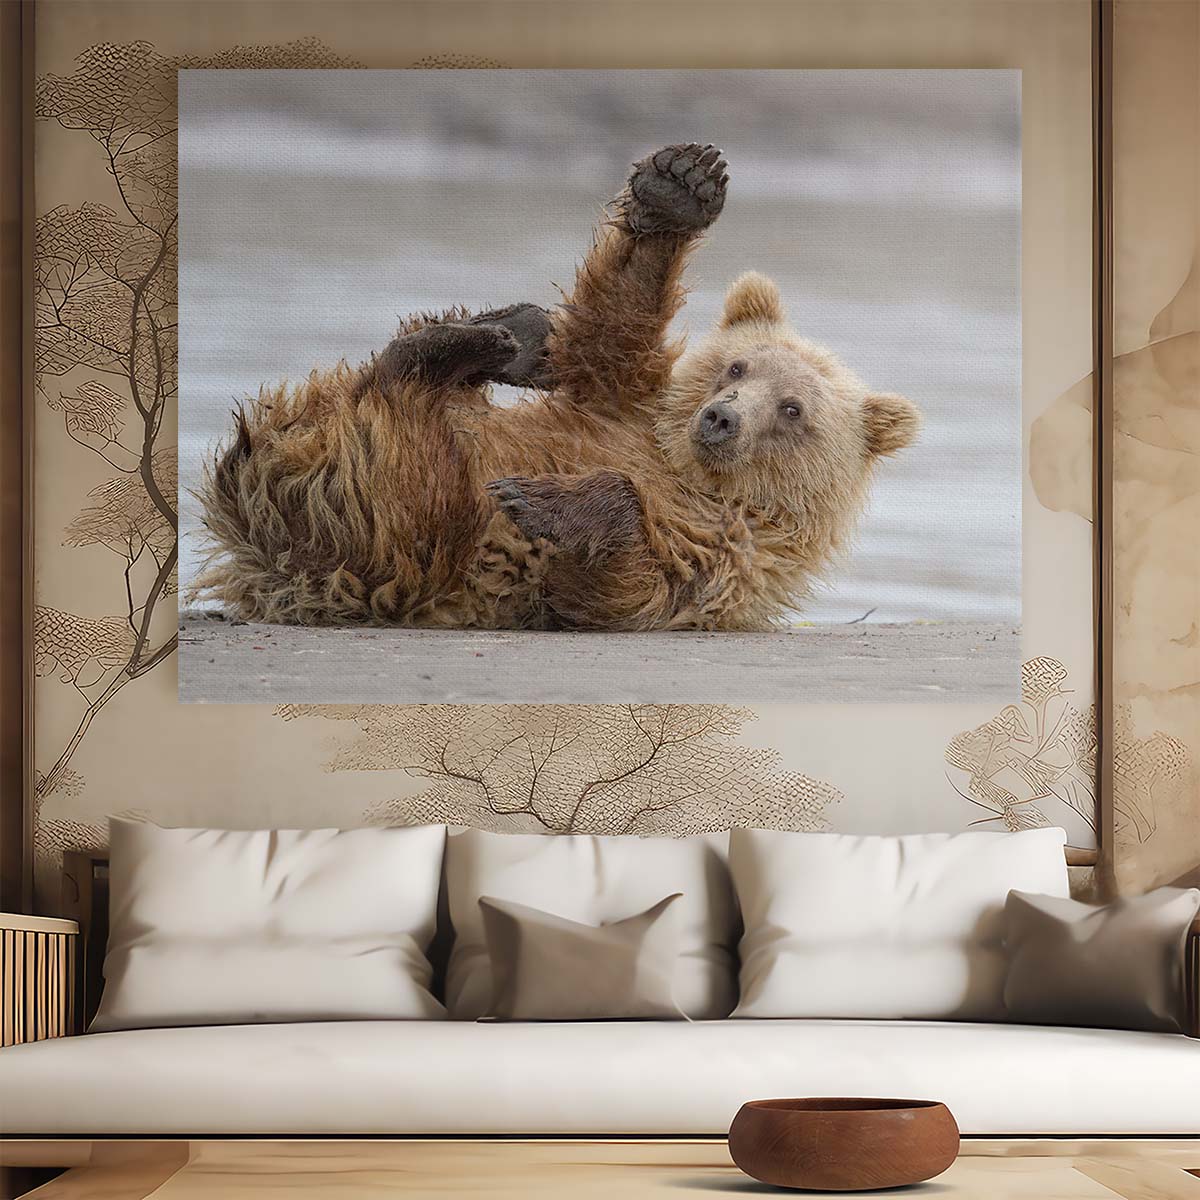 Alaskan Brown Bear Waving Coastal Wildlife Wall Art by Luxuriance Designs. Made in USA.